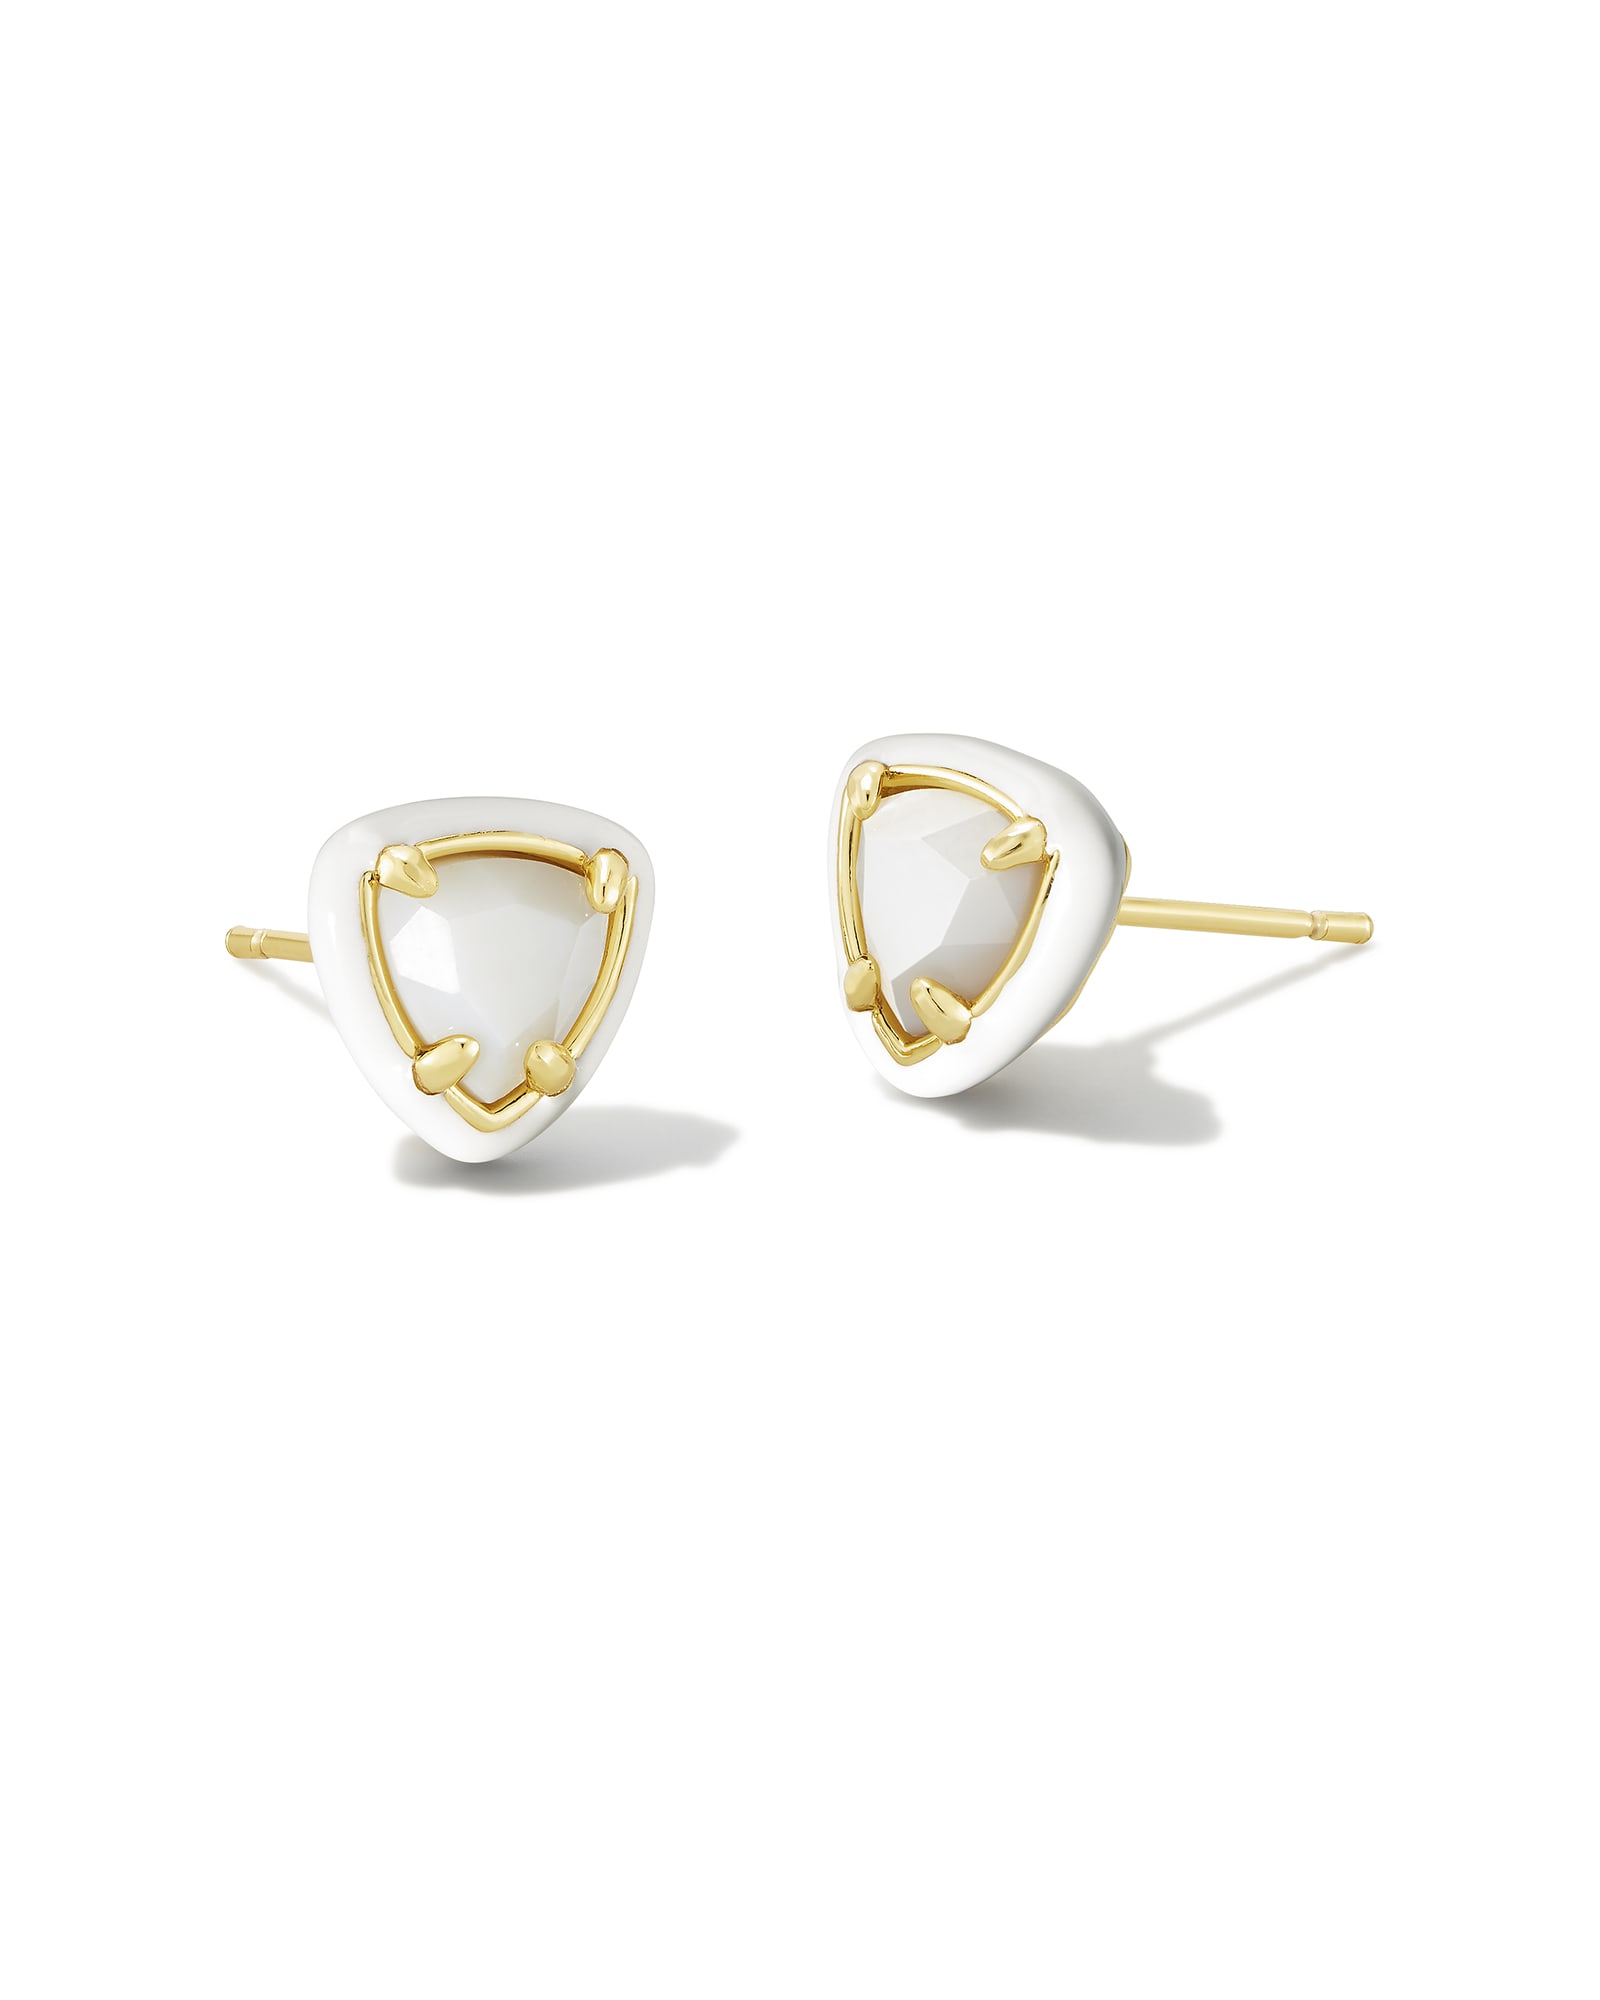 Kendra Scott Arden Gold Enamel Framed Stud Earrings in White Mother-of-Pearl | Mother Of Pearl